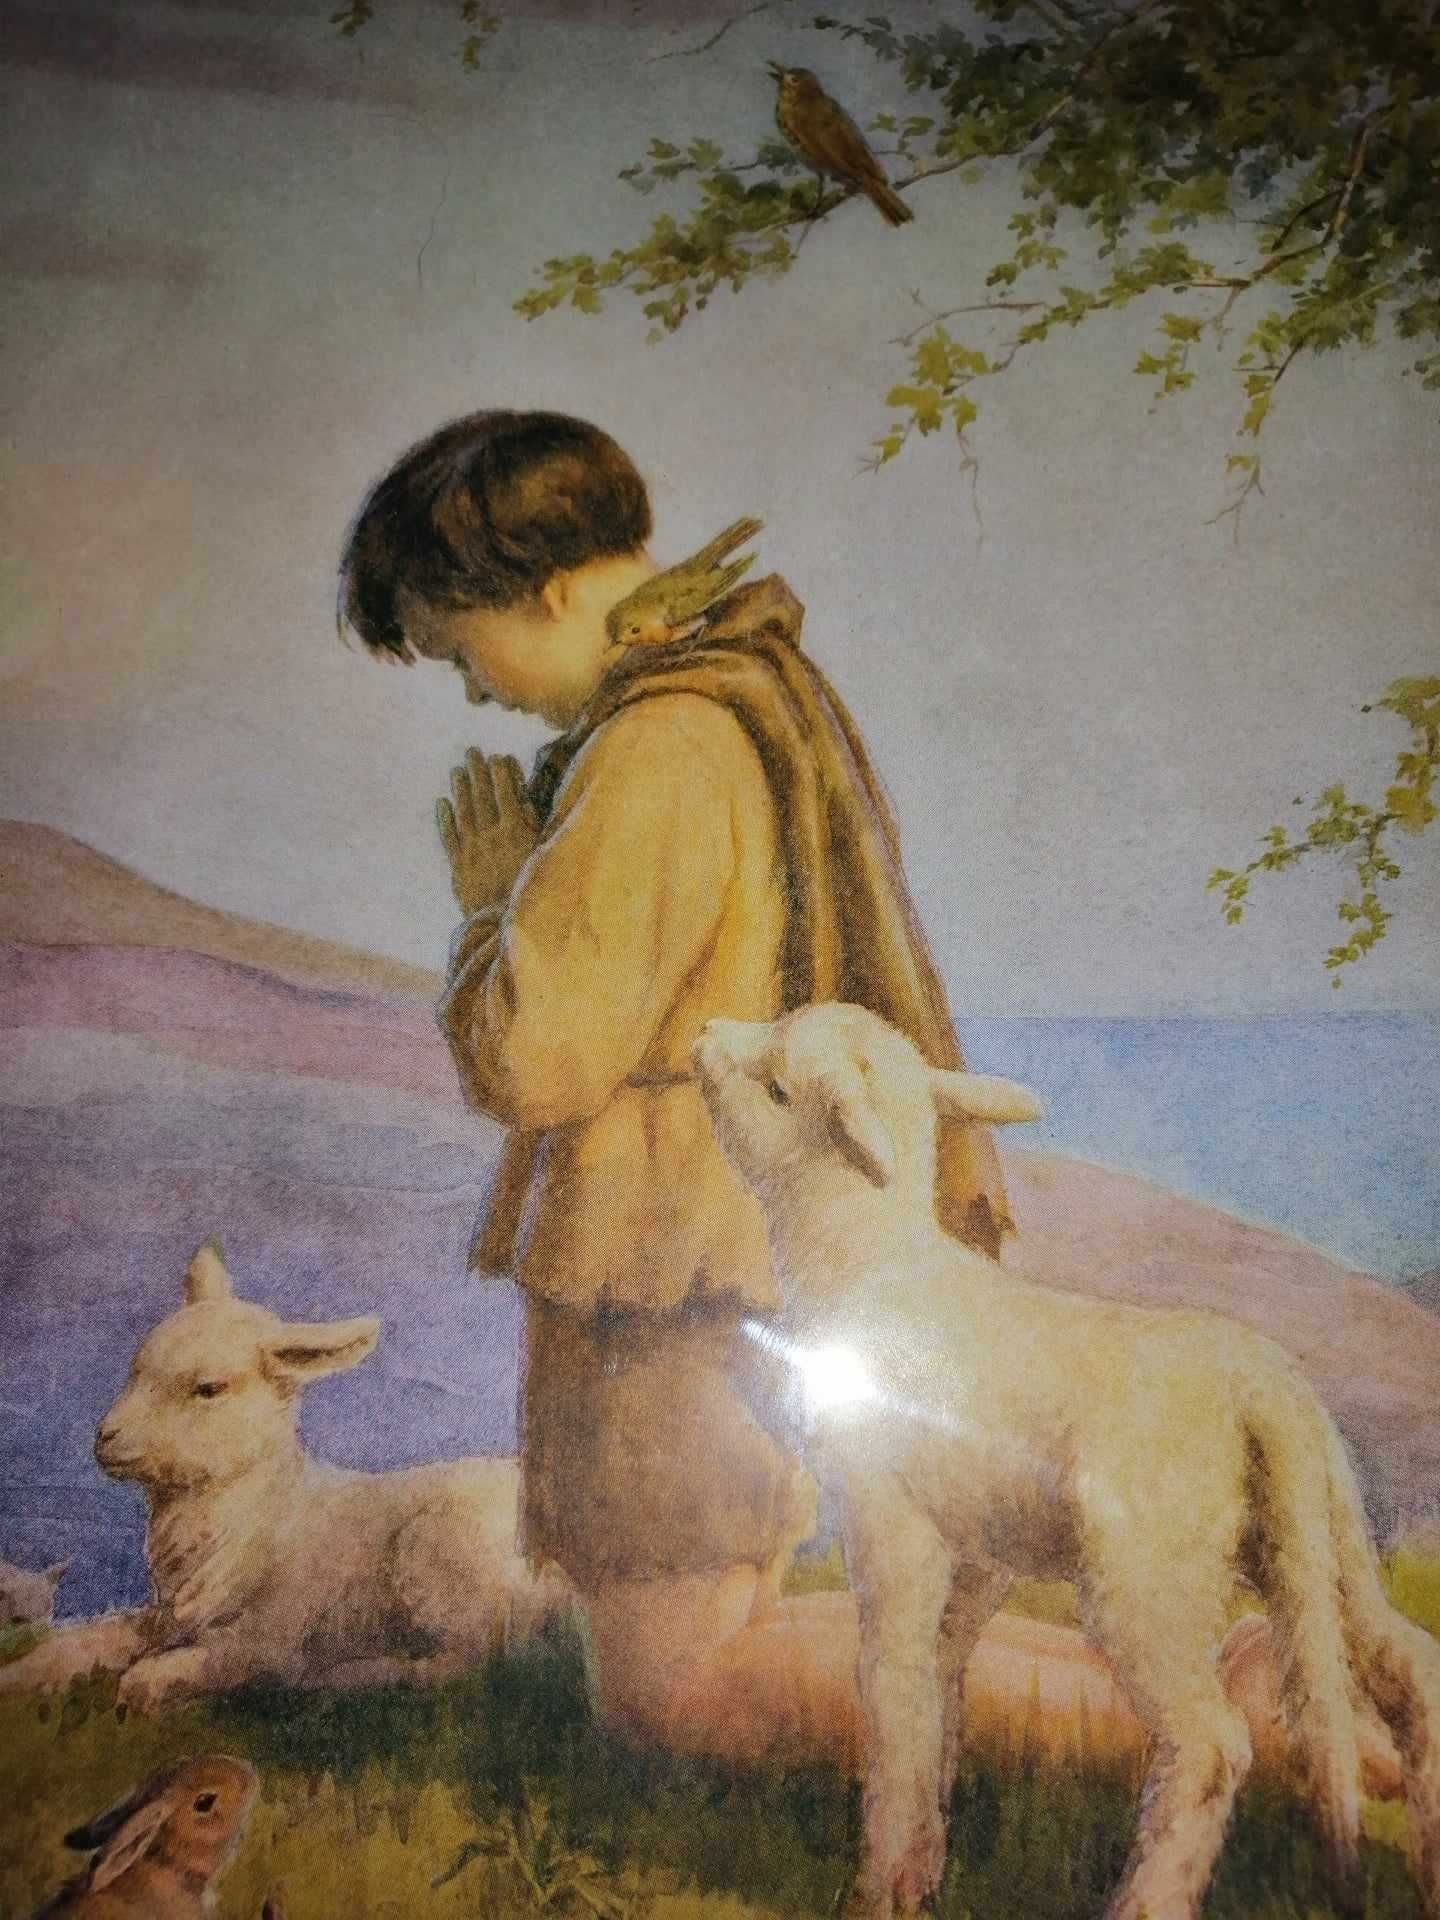 Tablou religios copil baiat rugandu-se cu miel rugaciune print